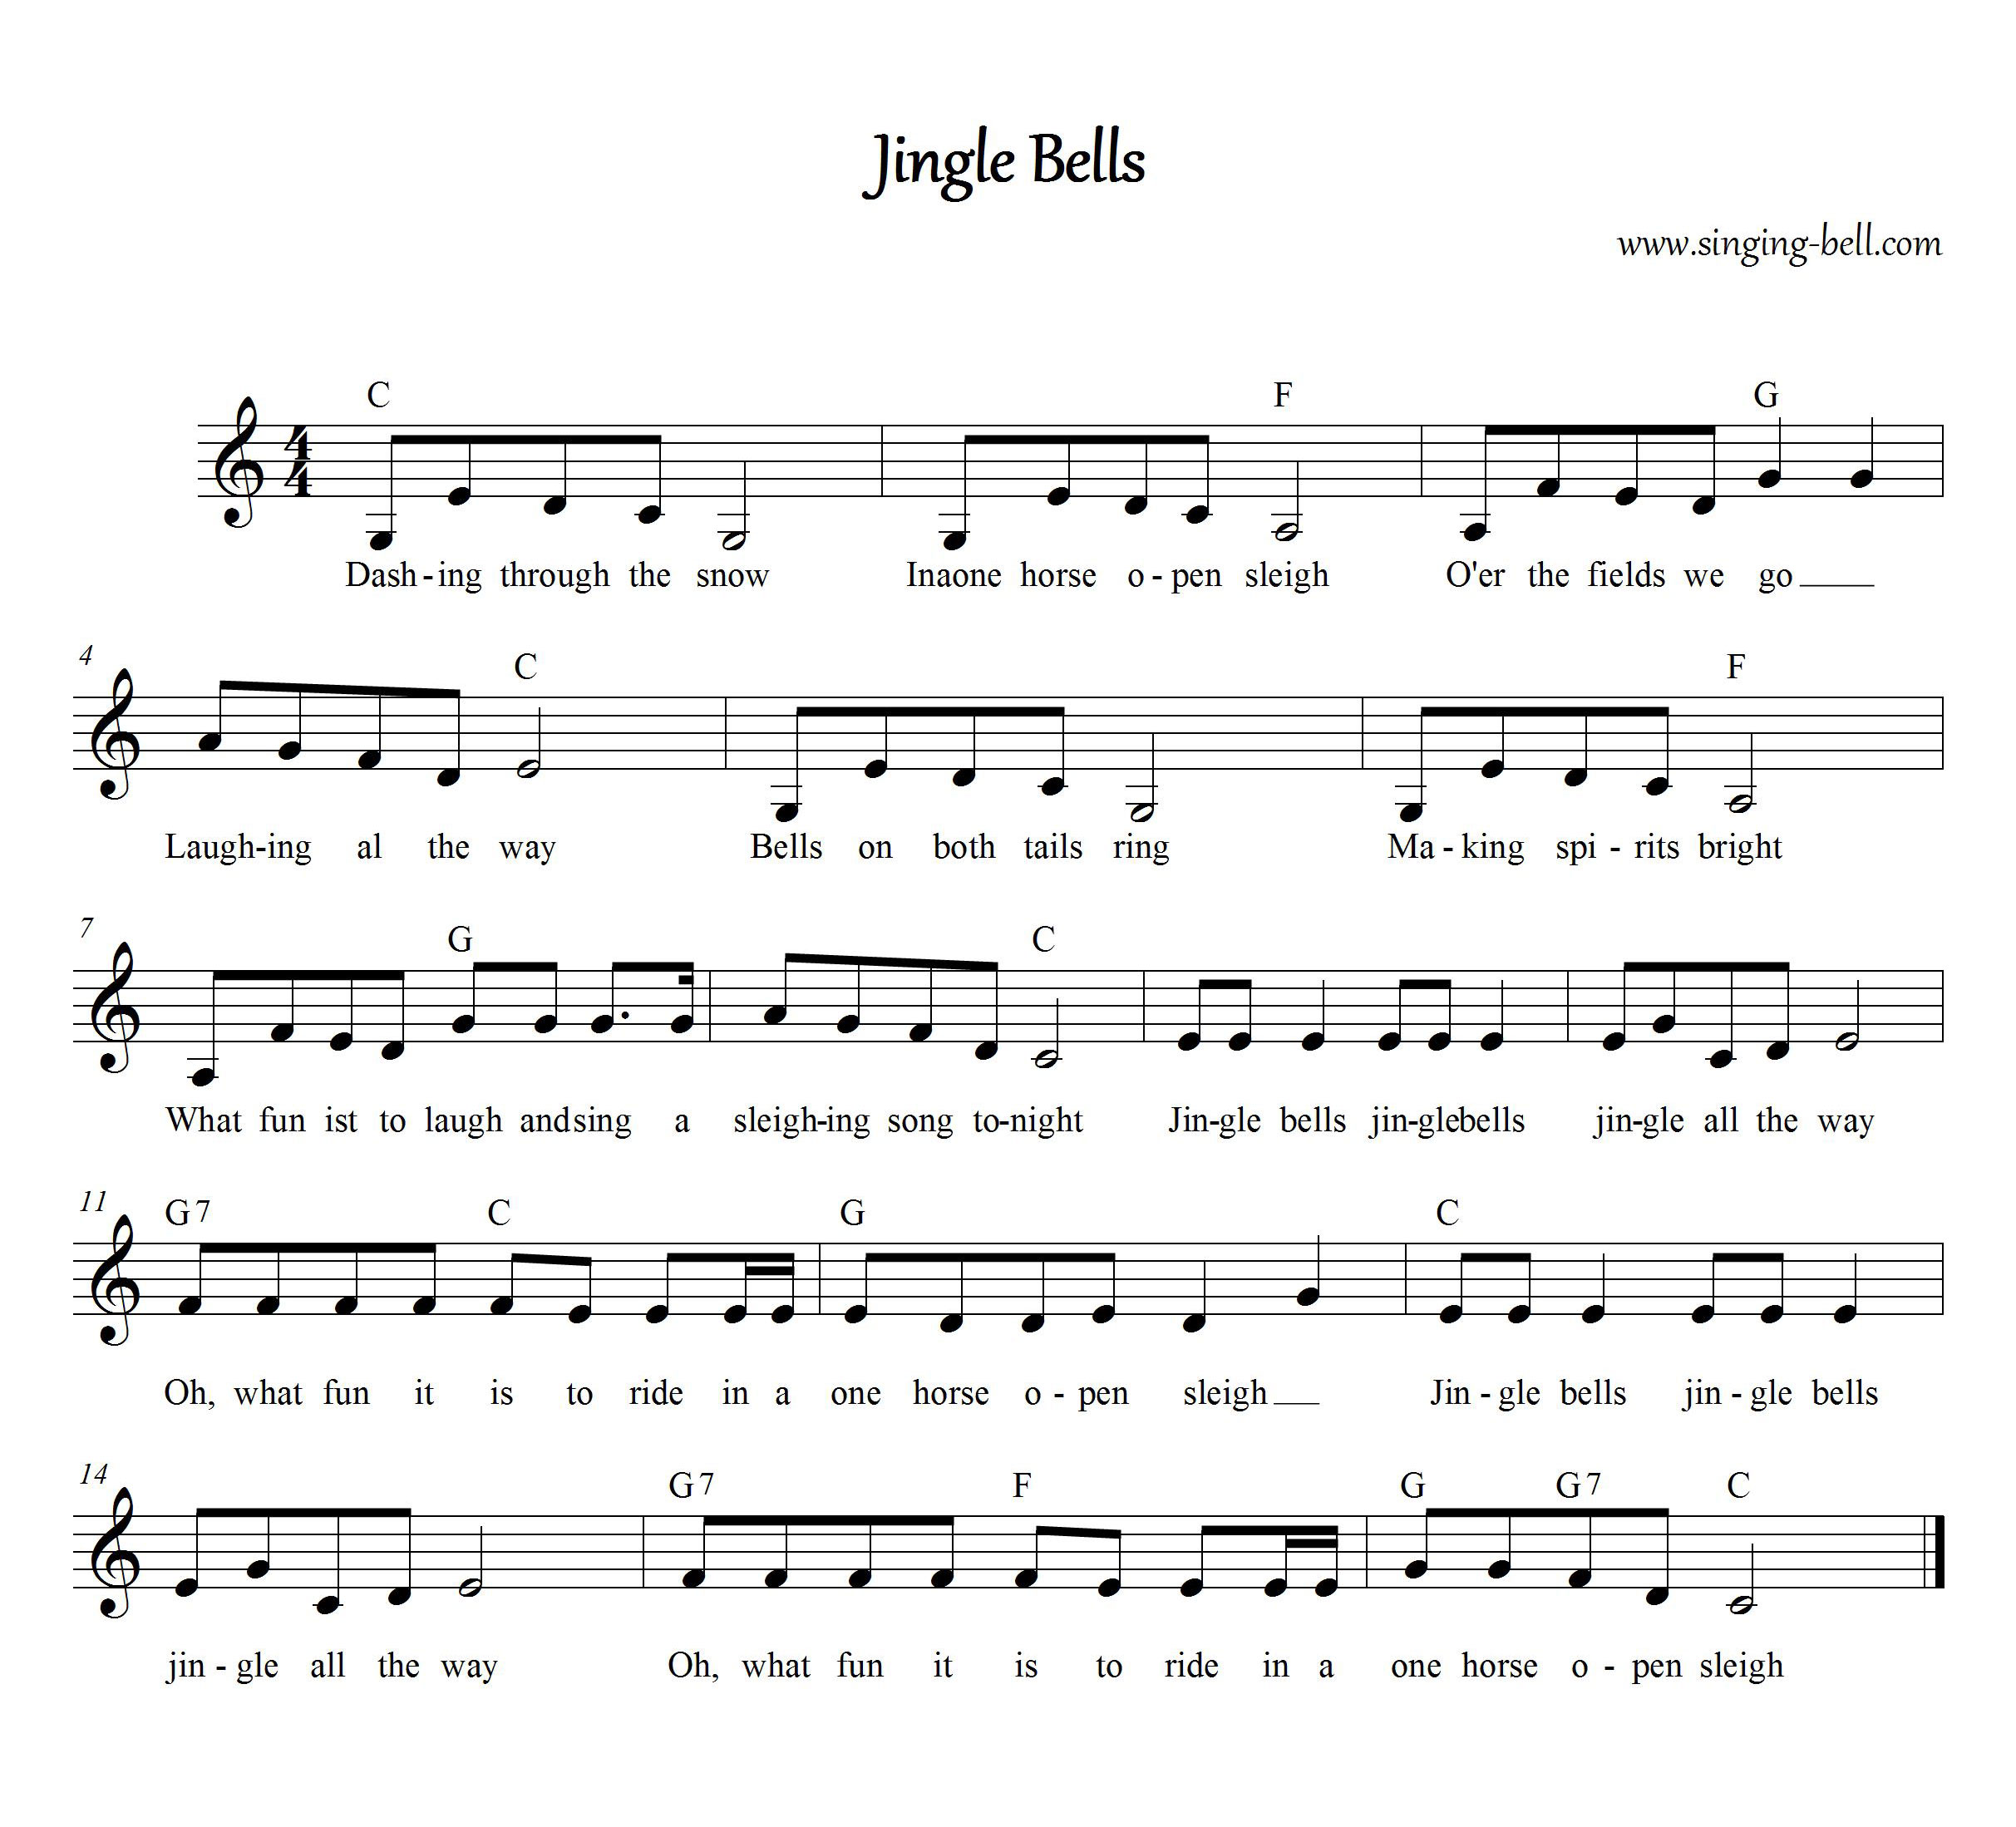 jingle-bells-easy-piano-sheet-music-jingle-bells-arrangement-kravchuk